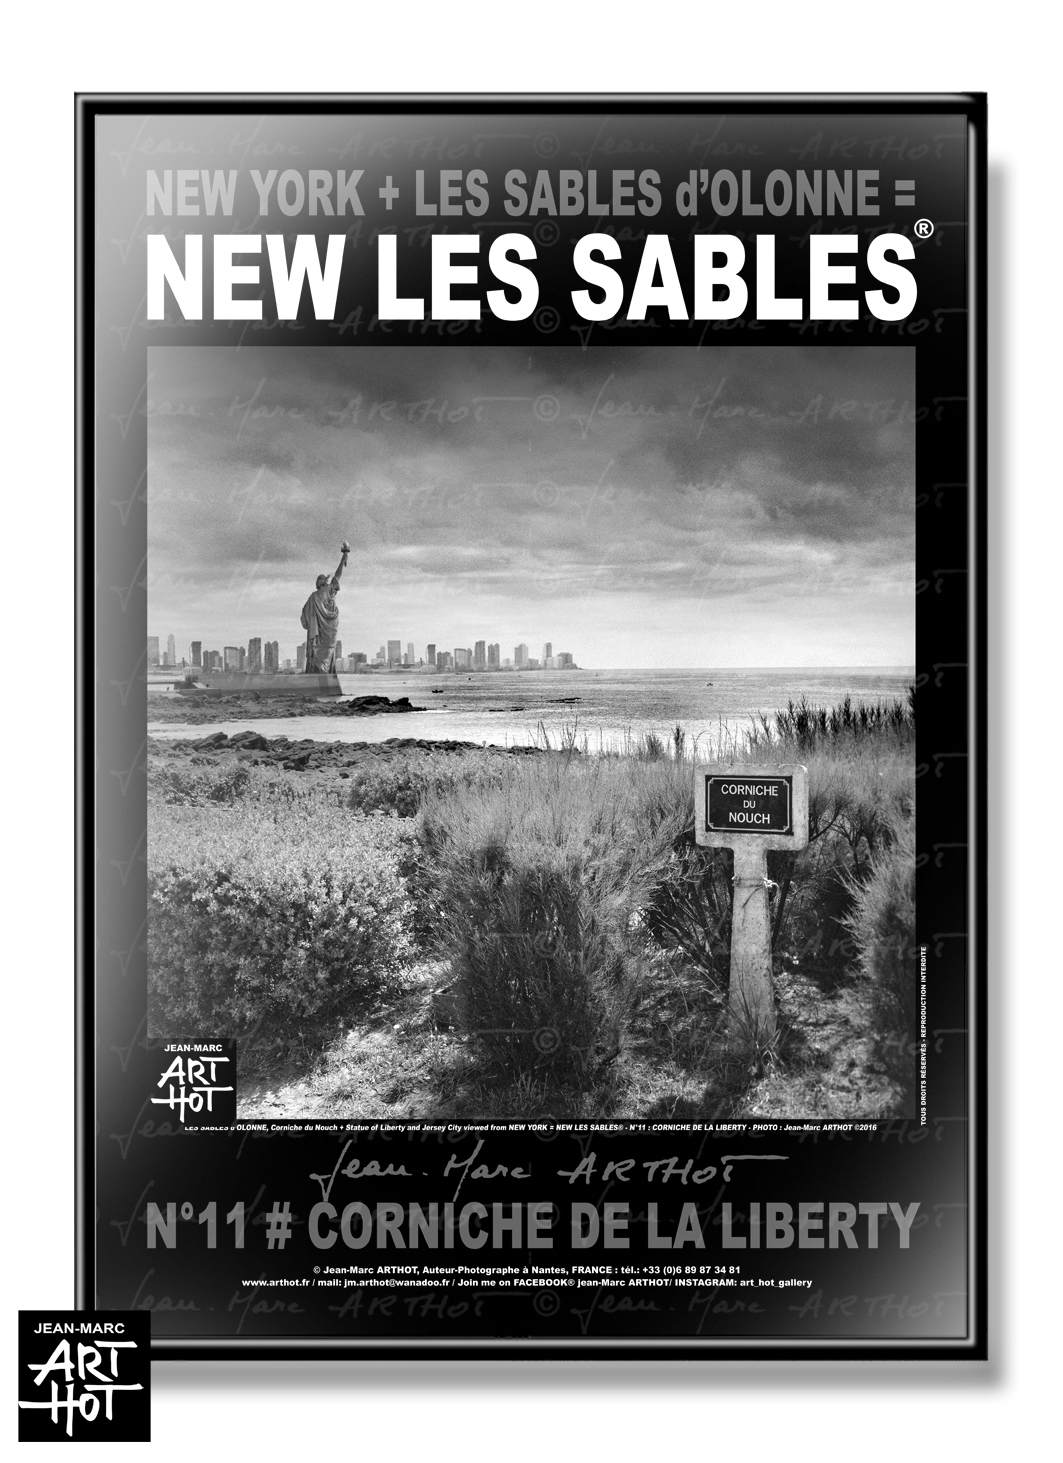 arthot-photo-art-b&amp;w-new-york-vendee-sables-olonne-newlessables-011-nouch-liberty-AFFICHE